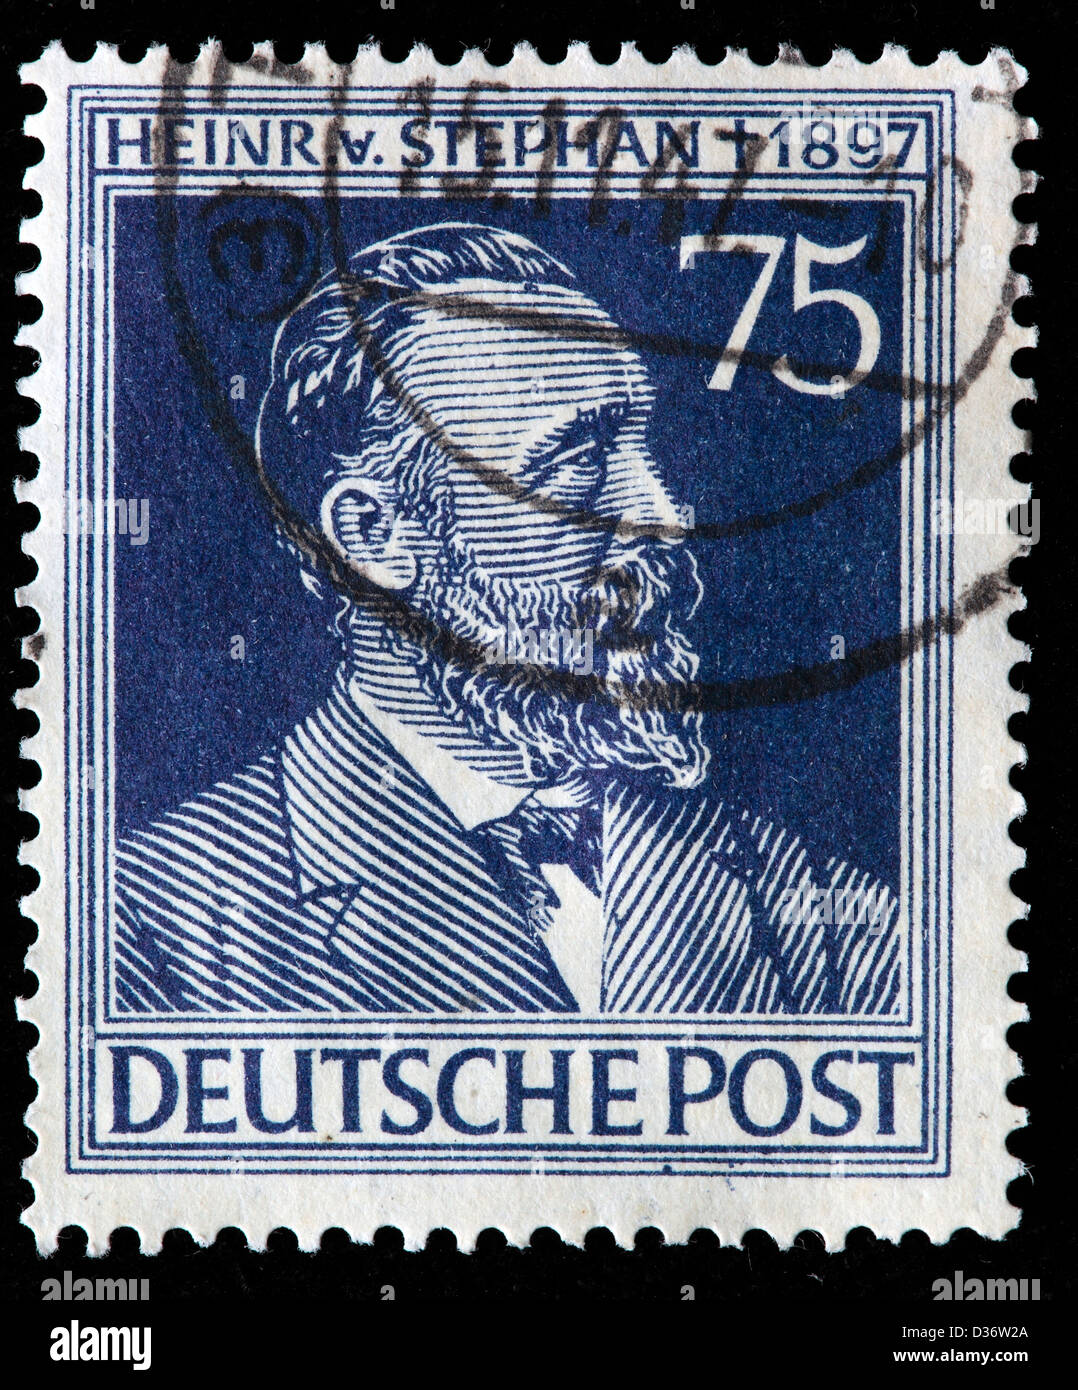 +Deutsche Post Briefmarke 1947 - Deutsche Post Briefmarken / Deutsche post is one of the world's ...